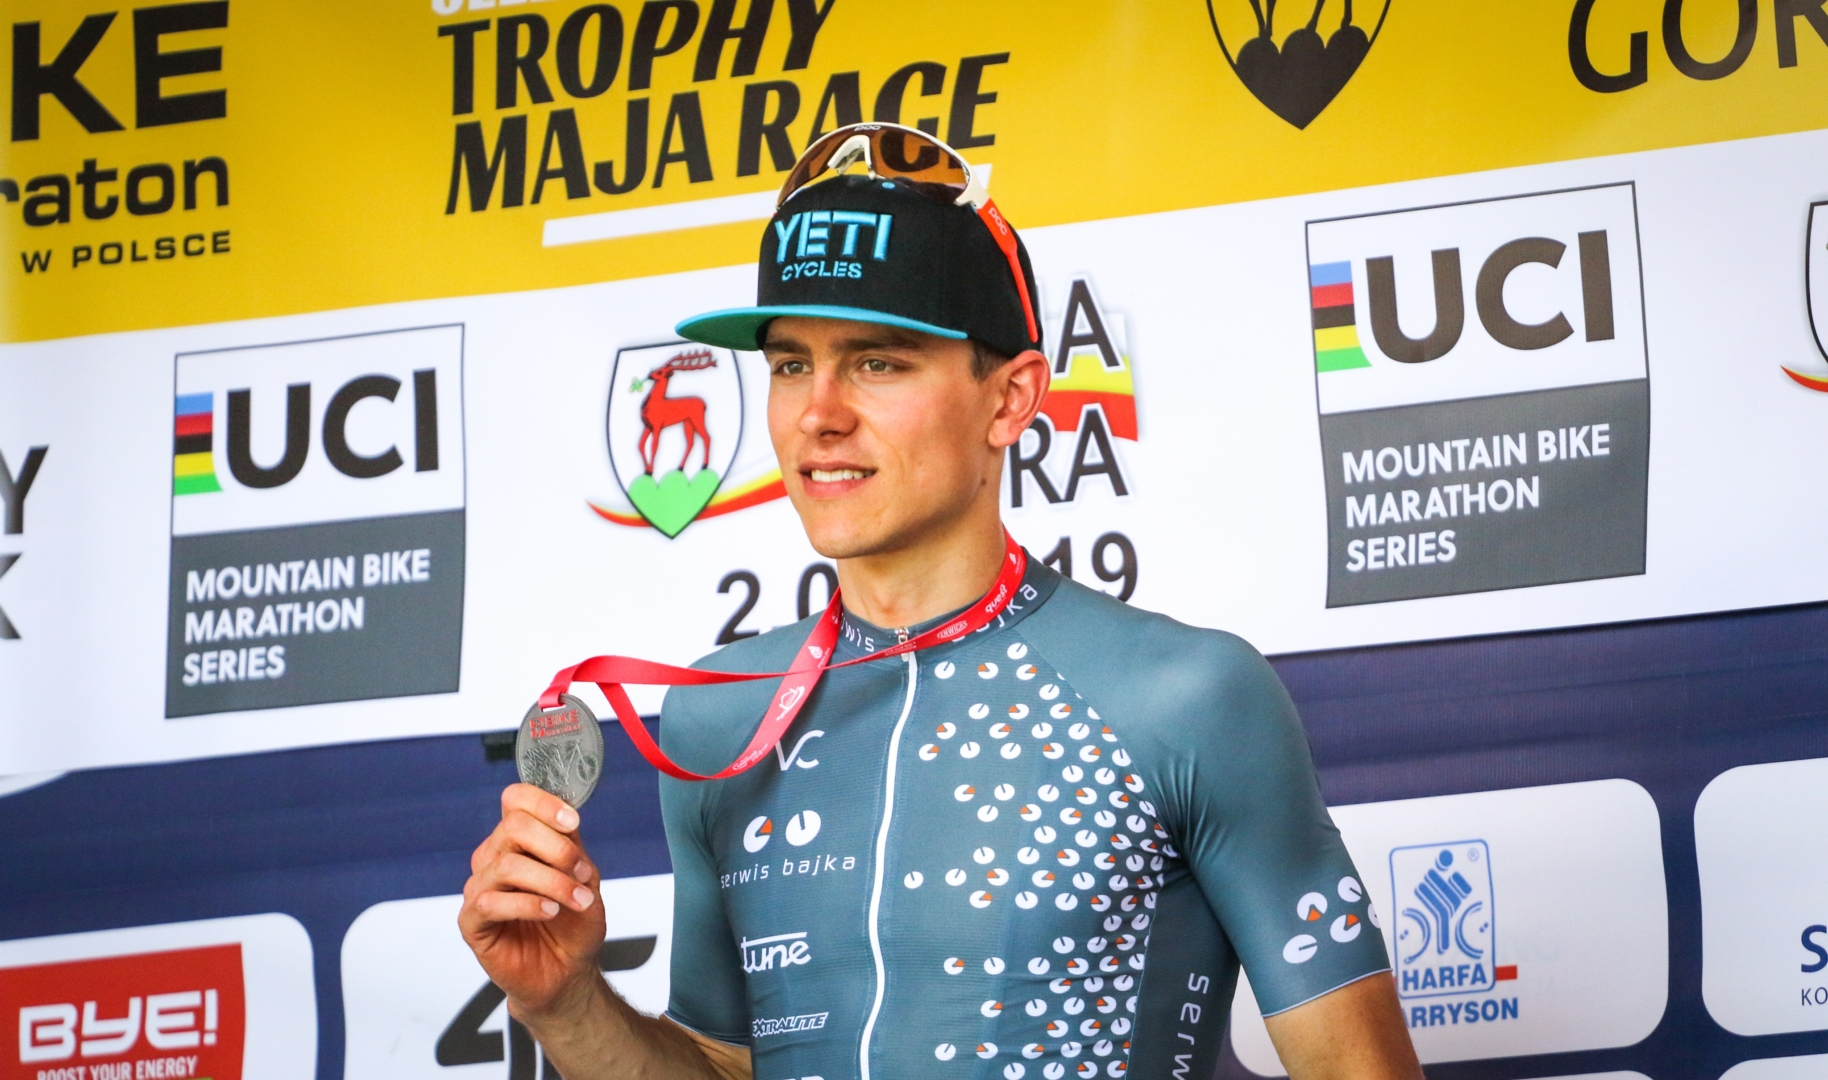 Mateusz Rejch (Serwis Bajka) – Bike Maraton, UCI Marathon Series, Jelenia Góra